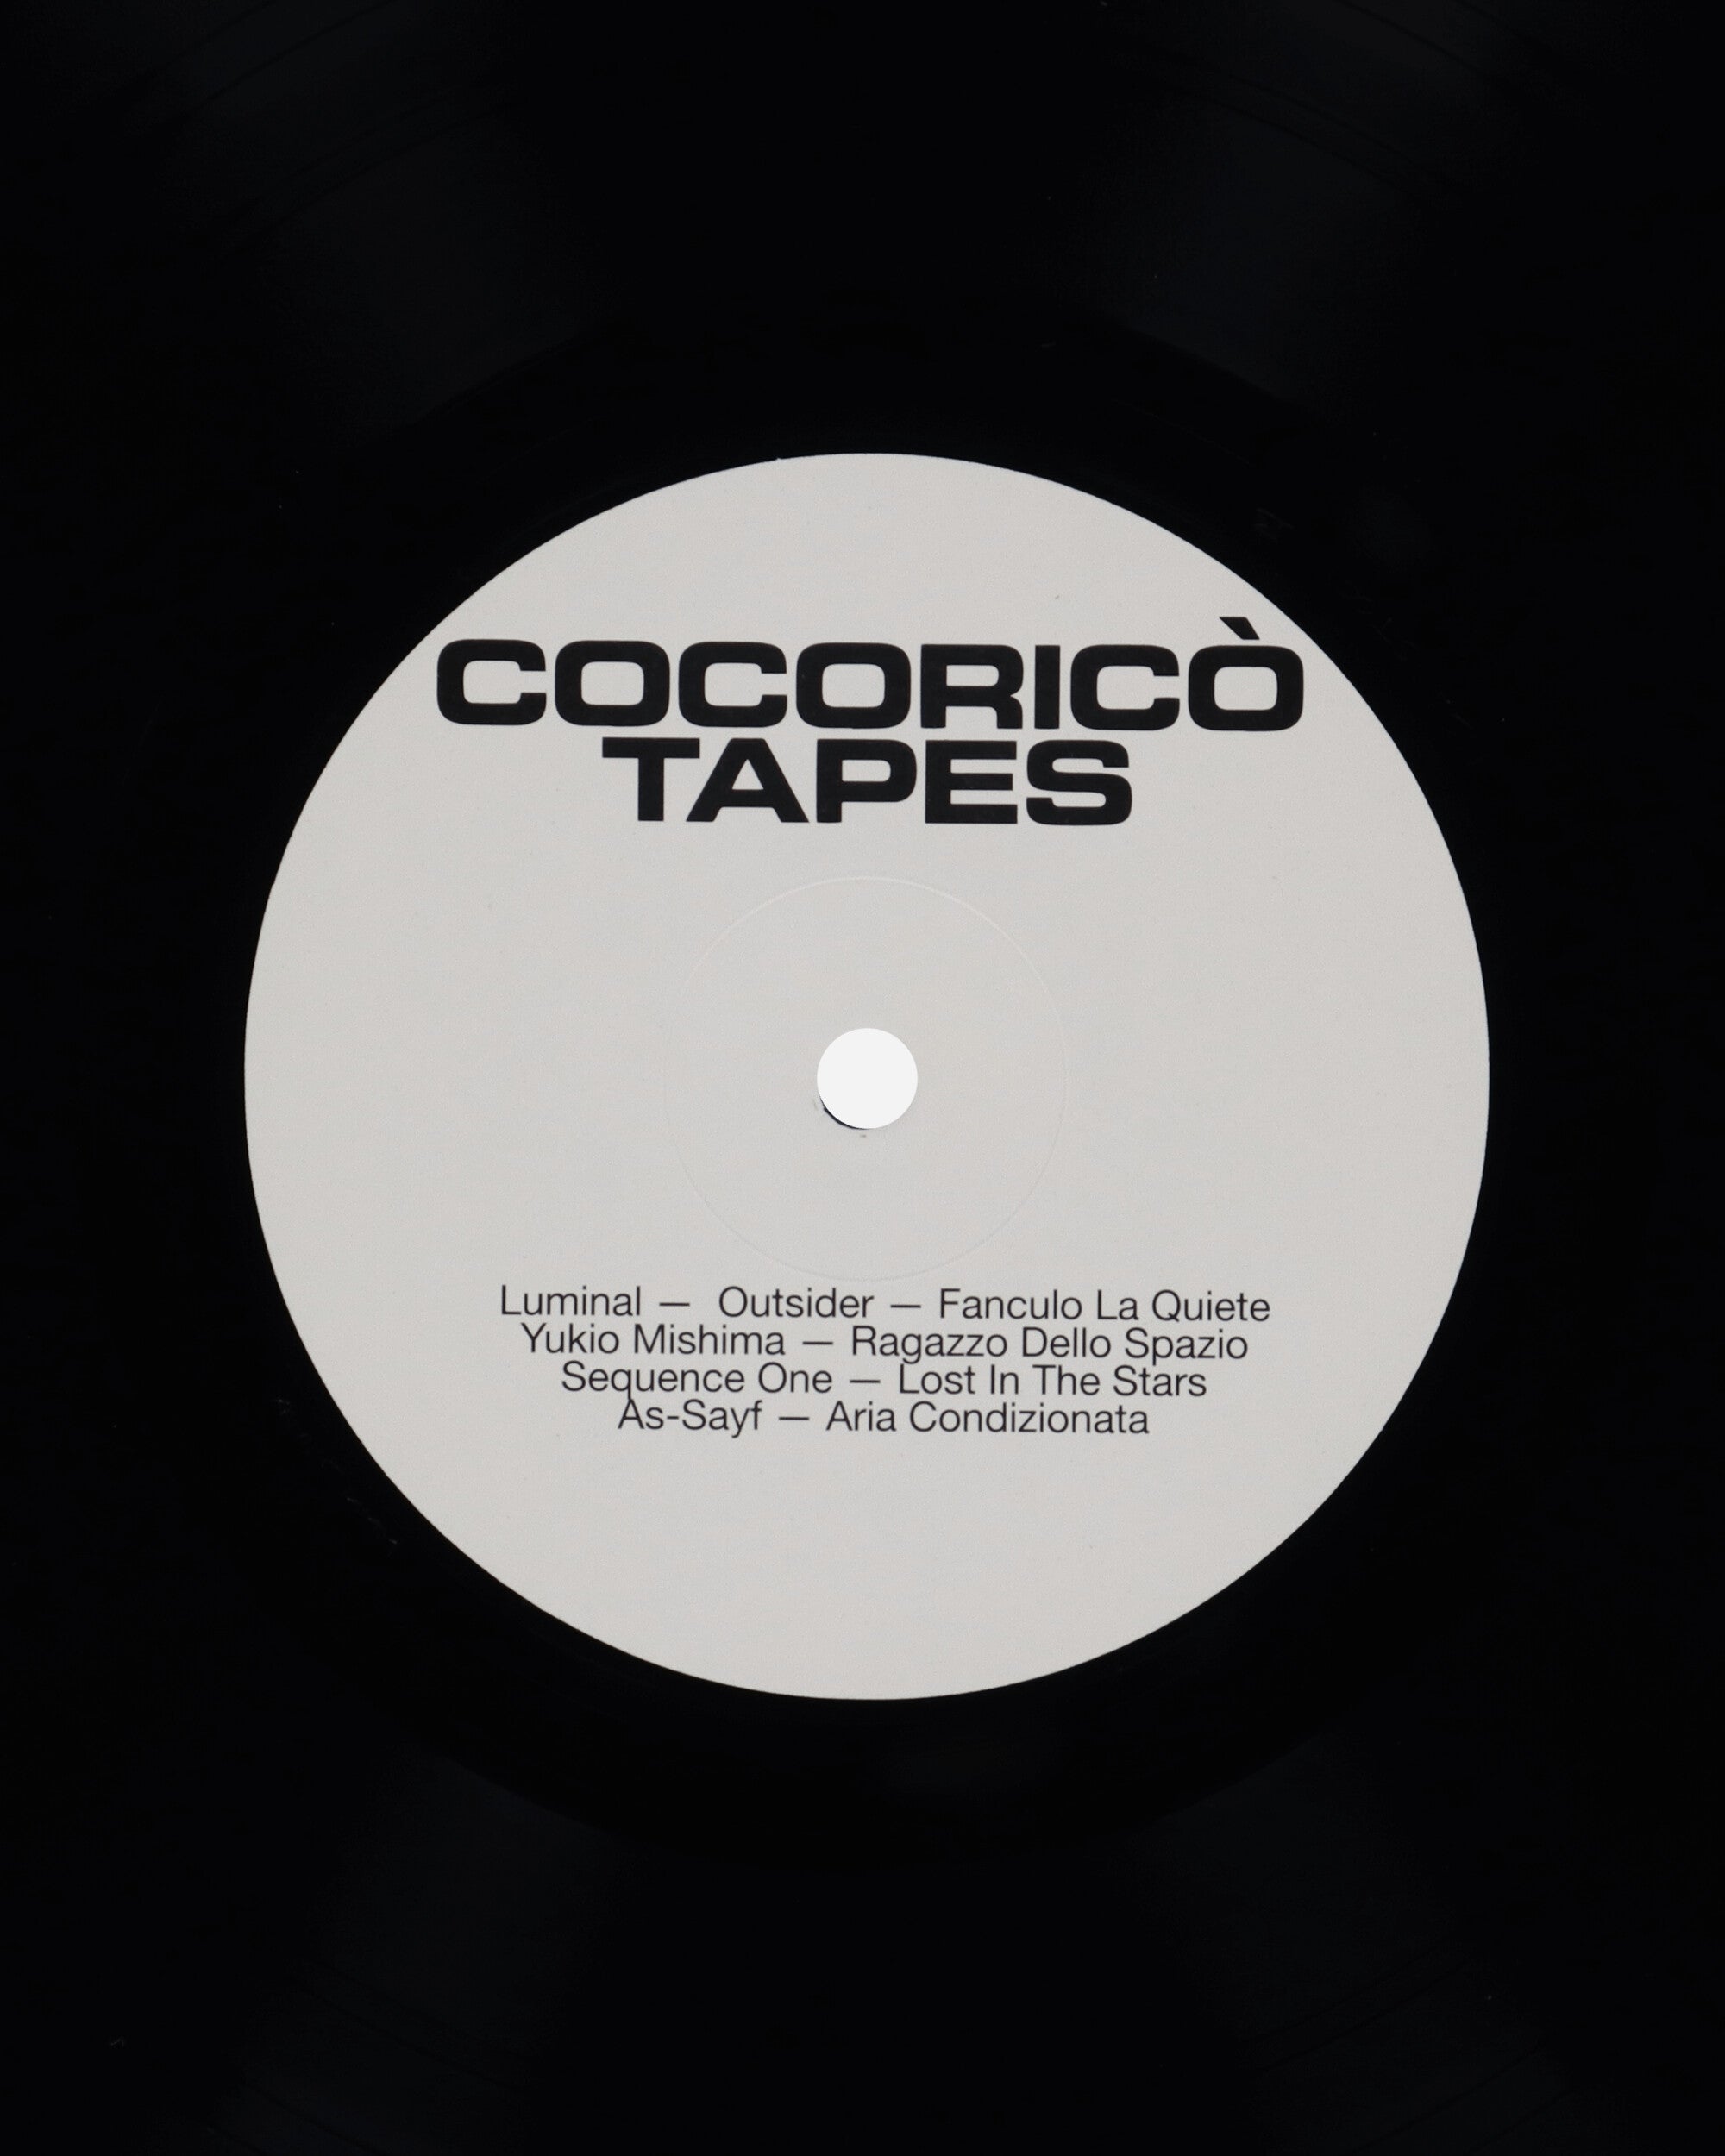 Slam Jam Cocorico' Tapes Black Music Vinyls SJCOCOVINYL 1